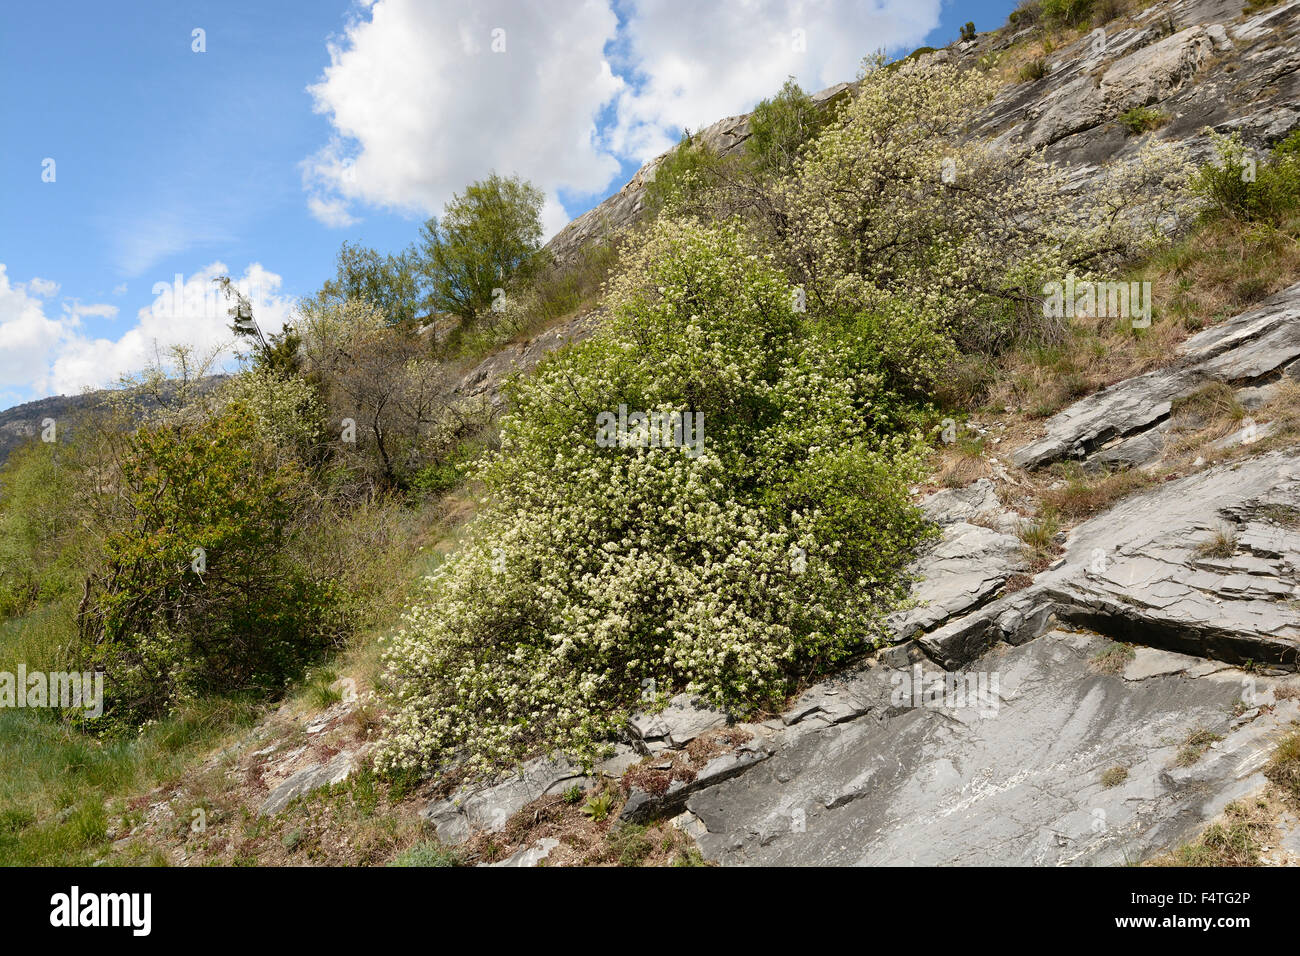 Dry slope, hedge, Haw, Hawthorn, Crataegus monogyna, Rosaceae, shrub, plant, blooming, flowers. rocks, Raron, Valais, Switzerlan Stock Photo